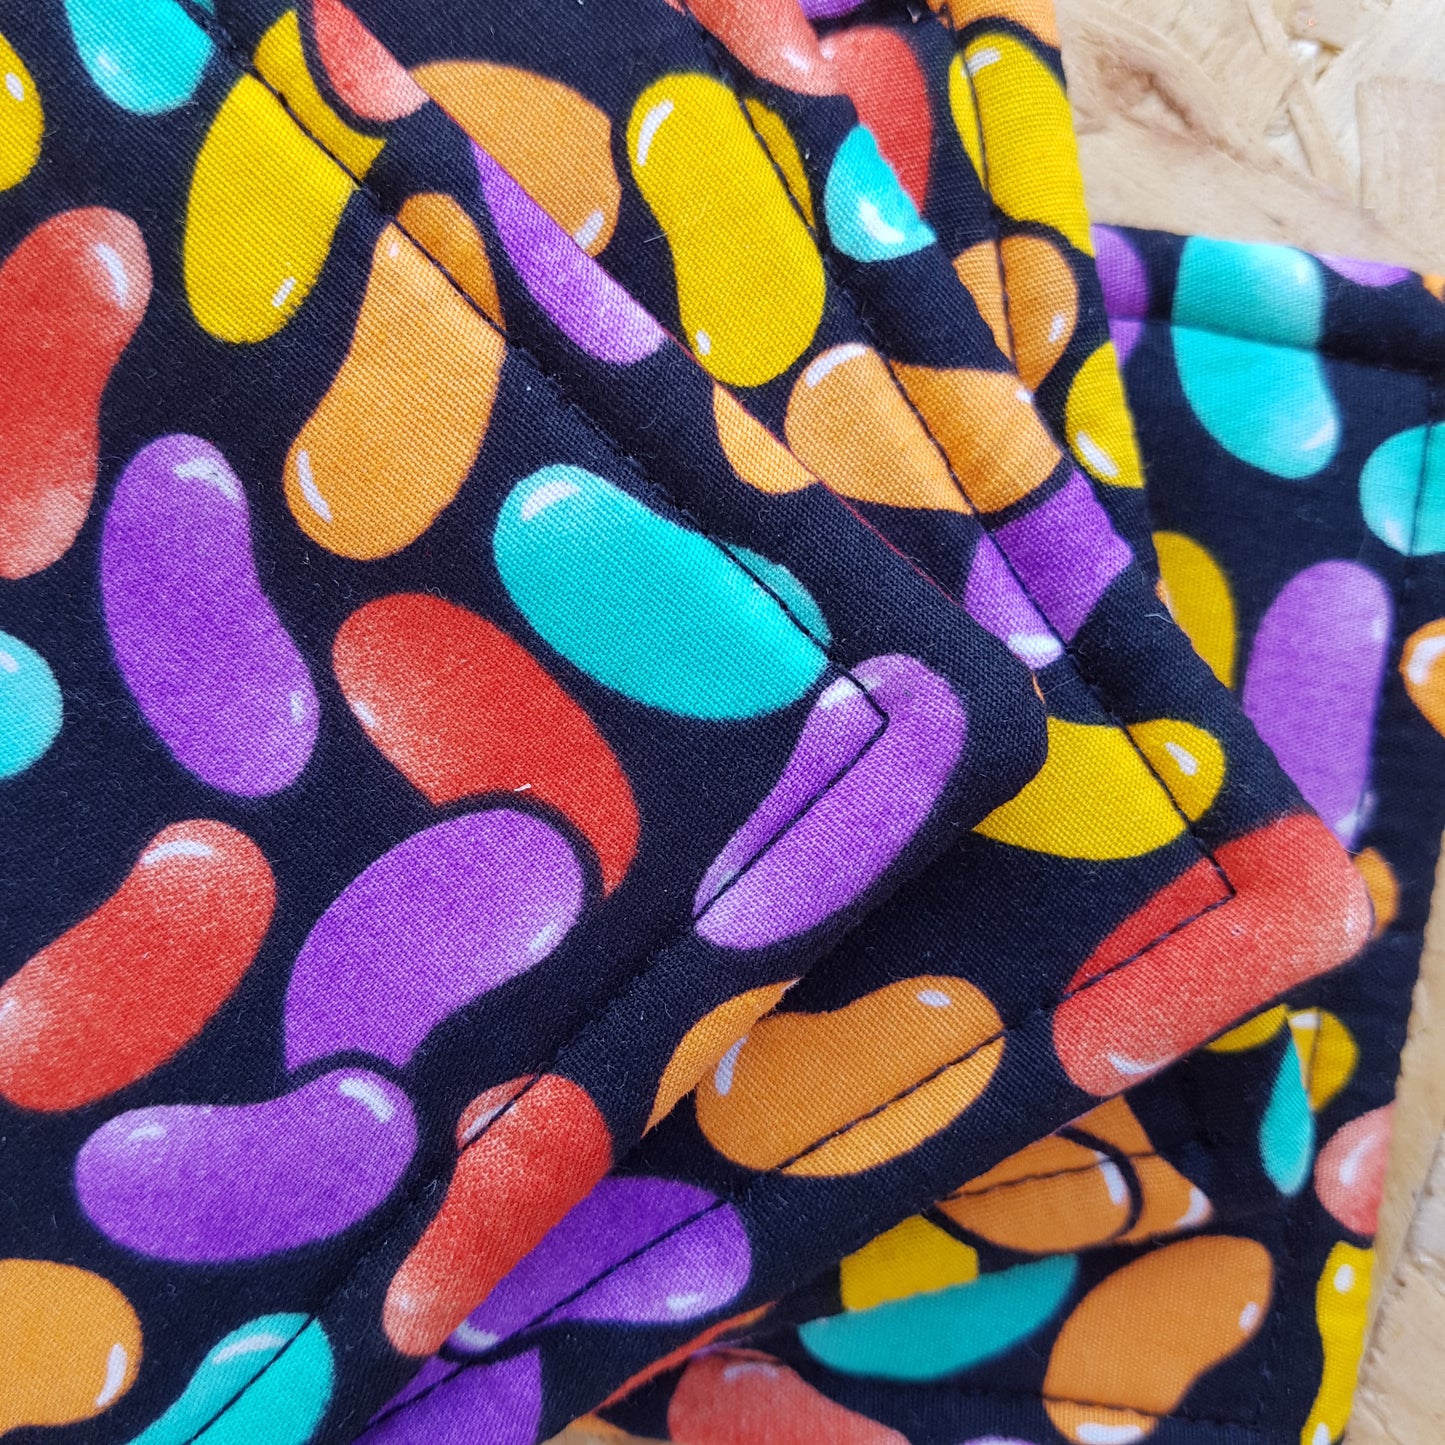 Jelly Bean Fabric Coasters